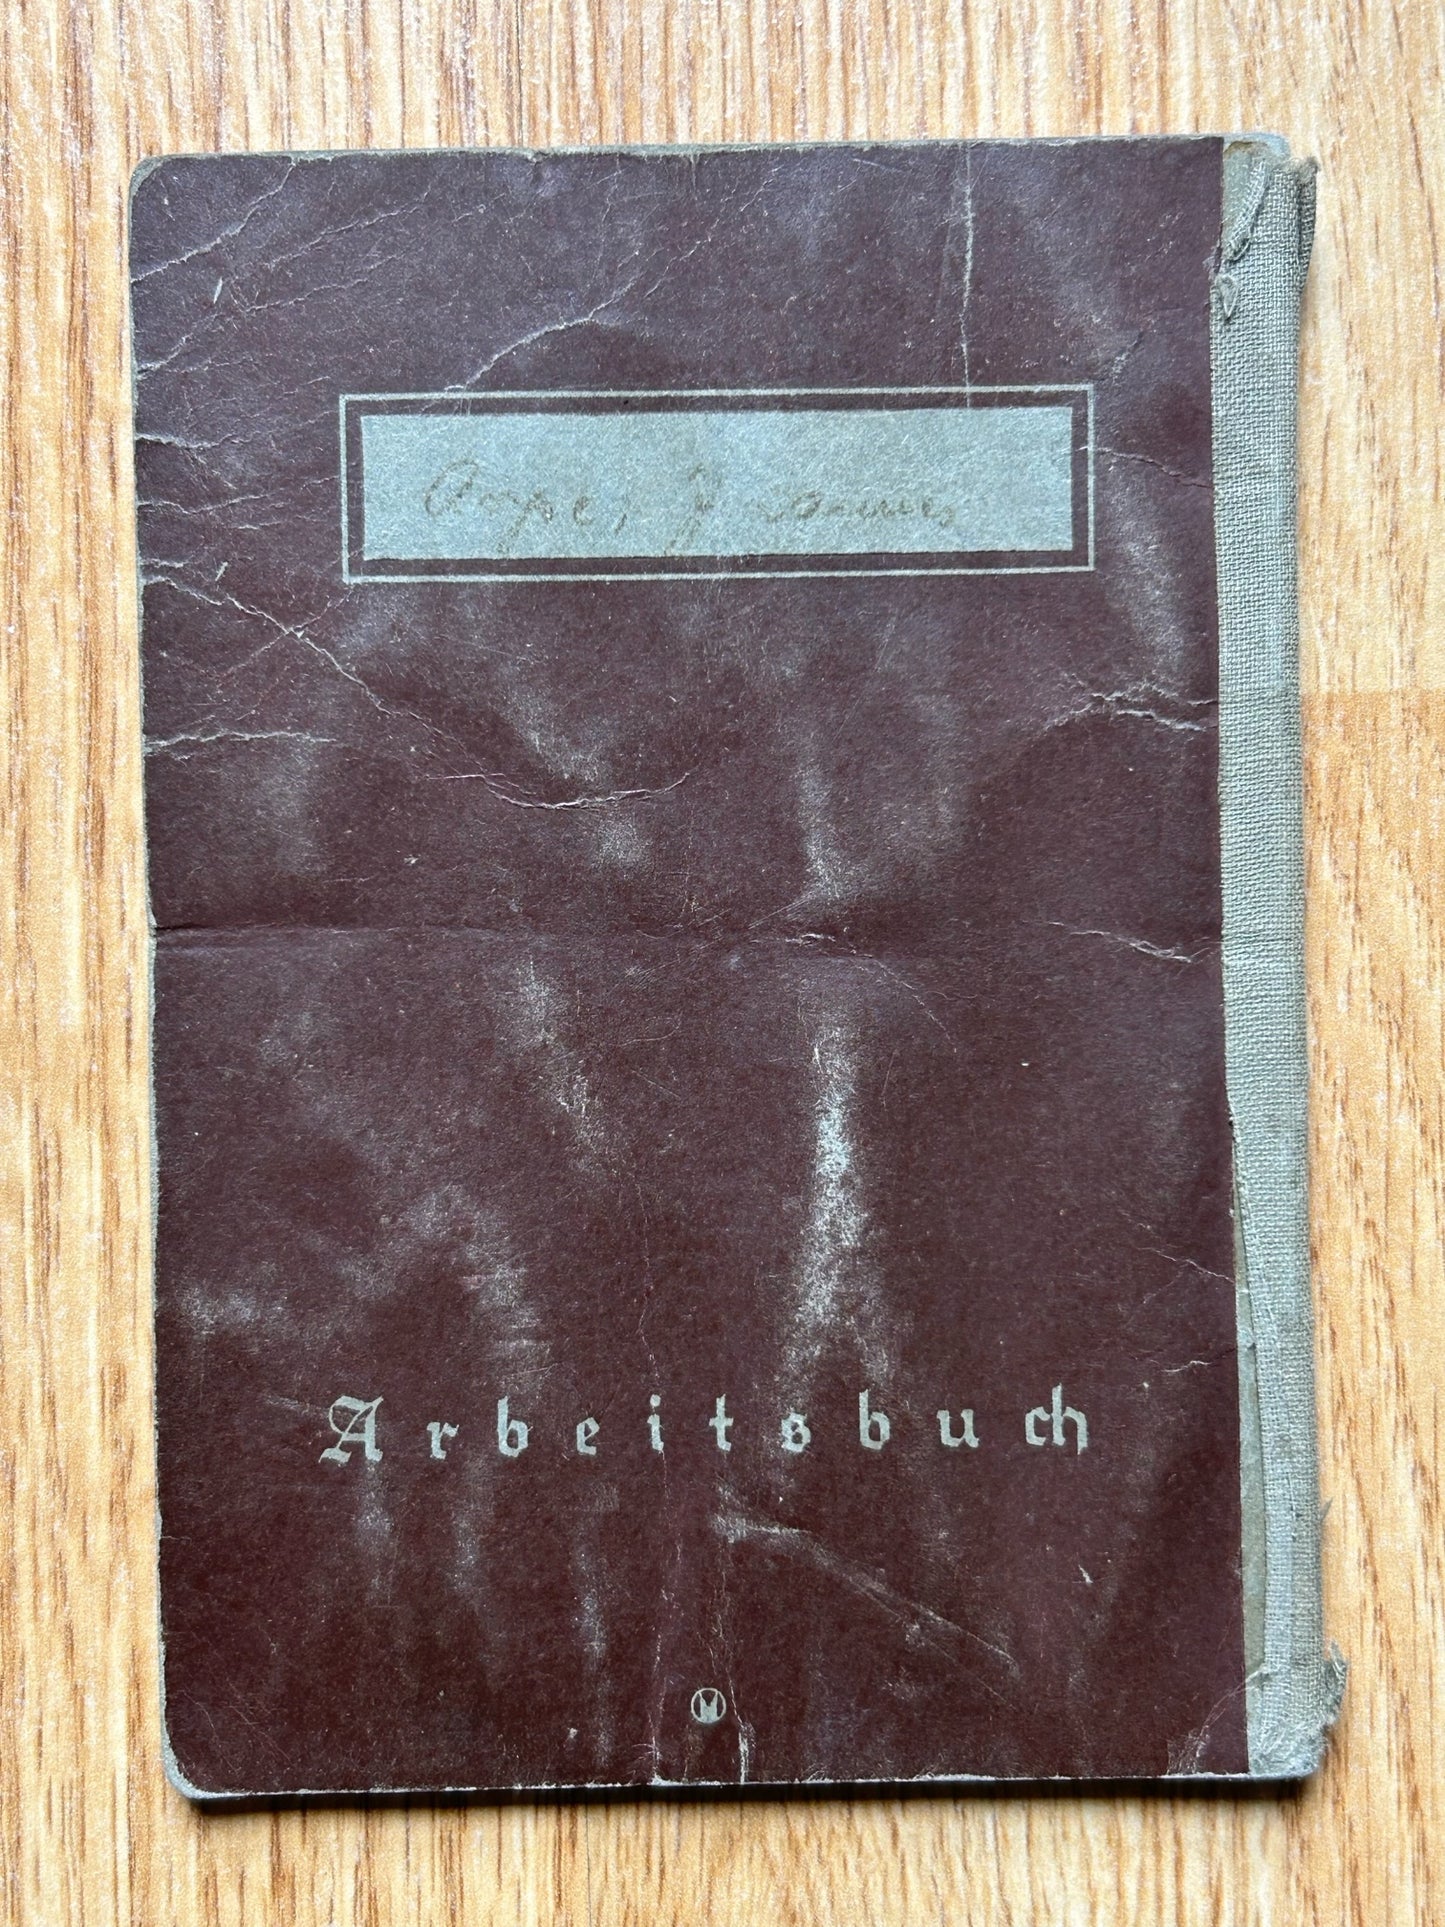 Arbeitsbuch - Berlin area carpenter / railway employee